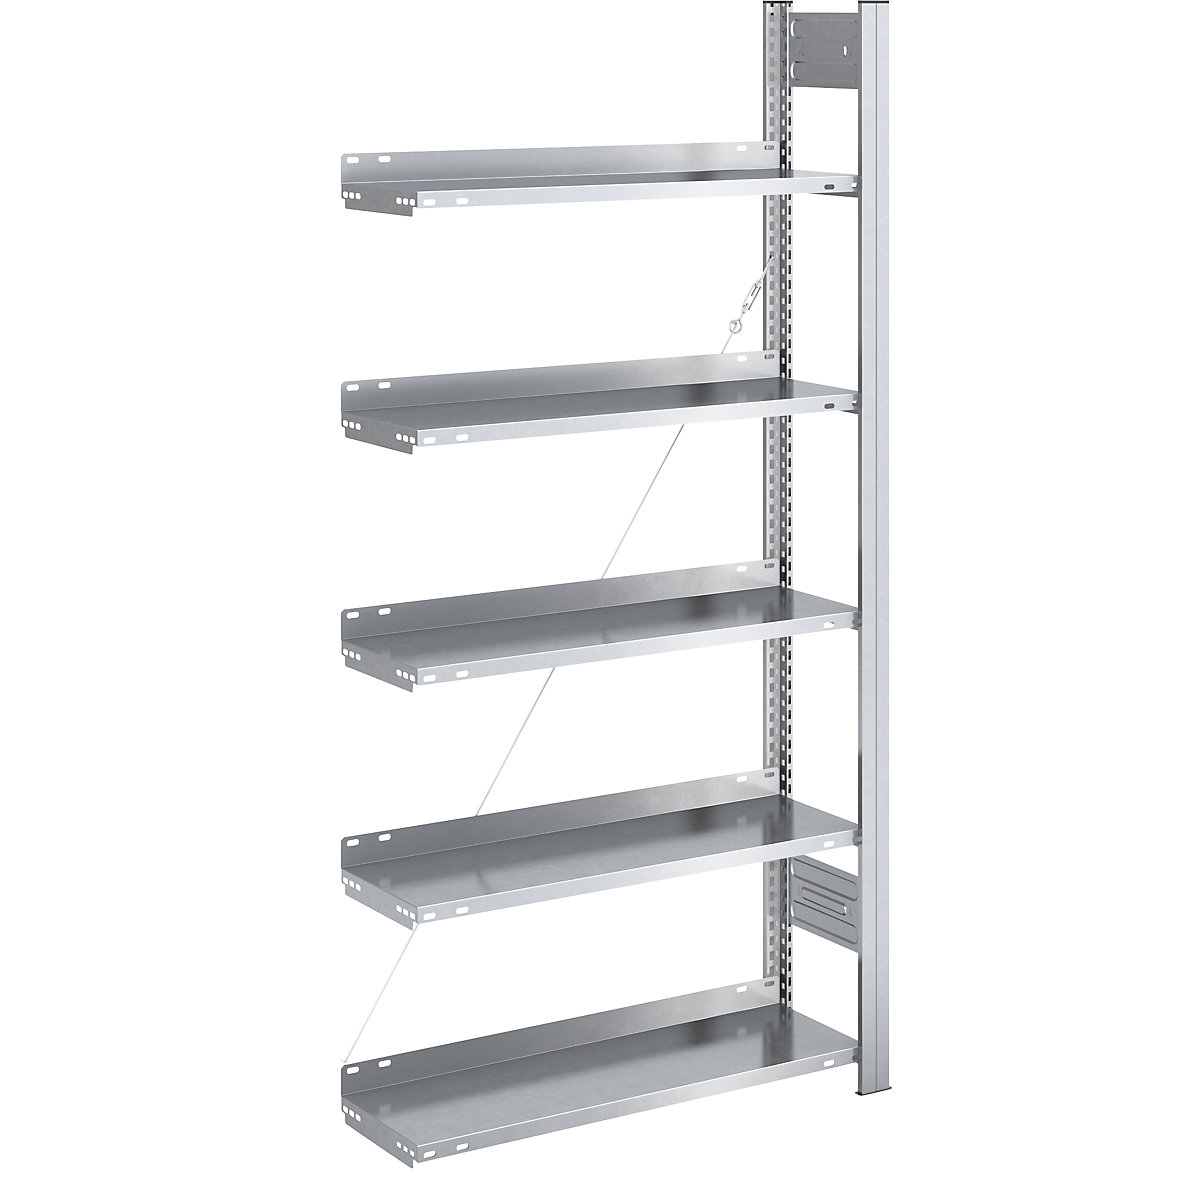 Boltless filing shelf unit, zinc plated – hofe, shelf height 1750 mm, single sided, extension shelf unit, WxD 750 x 300 mm-7